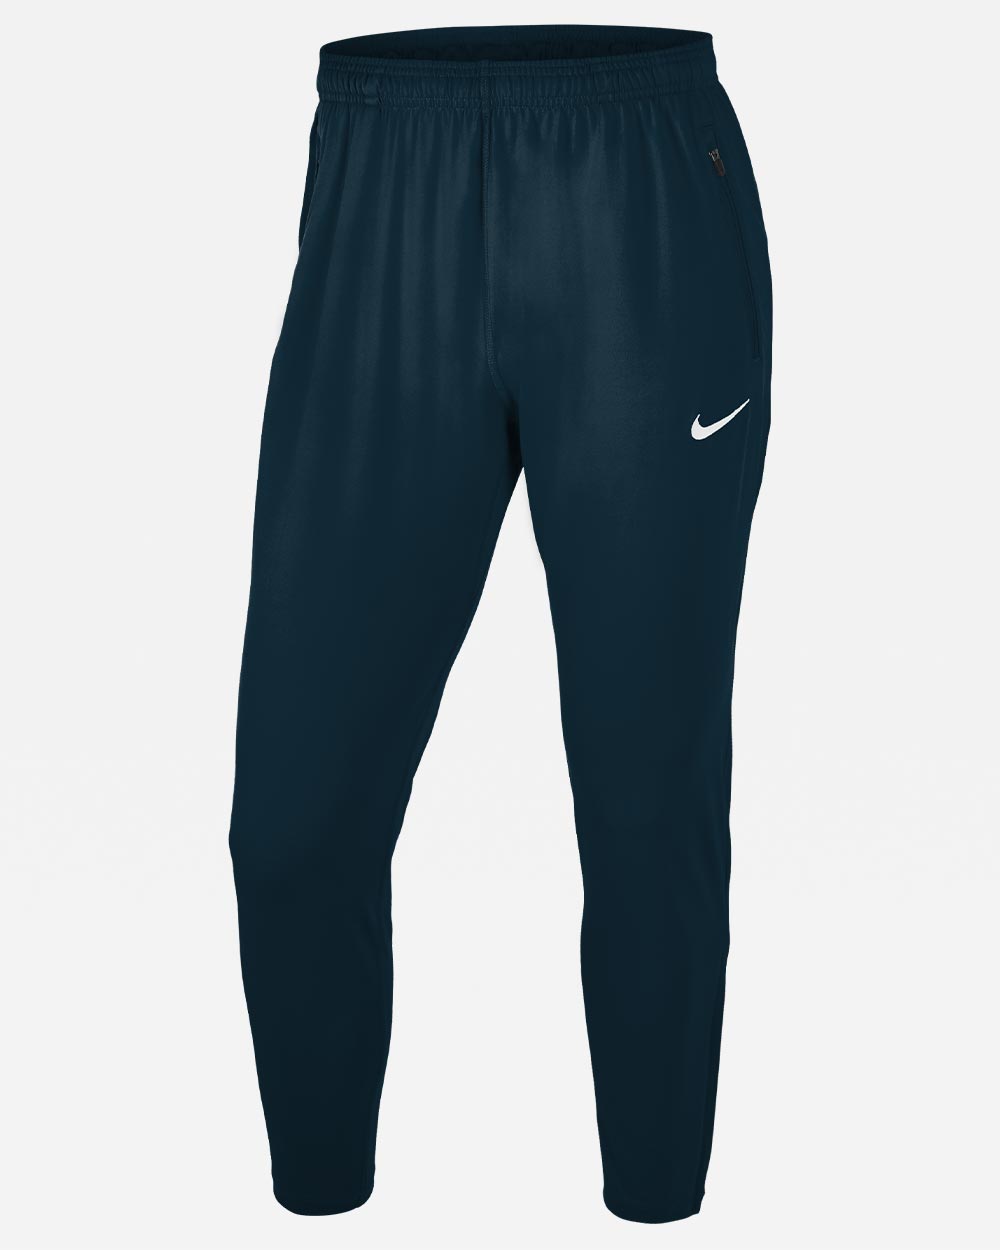 Pantalón de chándal Nike Dry Element Azul Marino para Hombre - NT0317-451